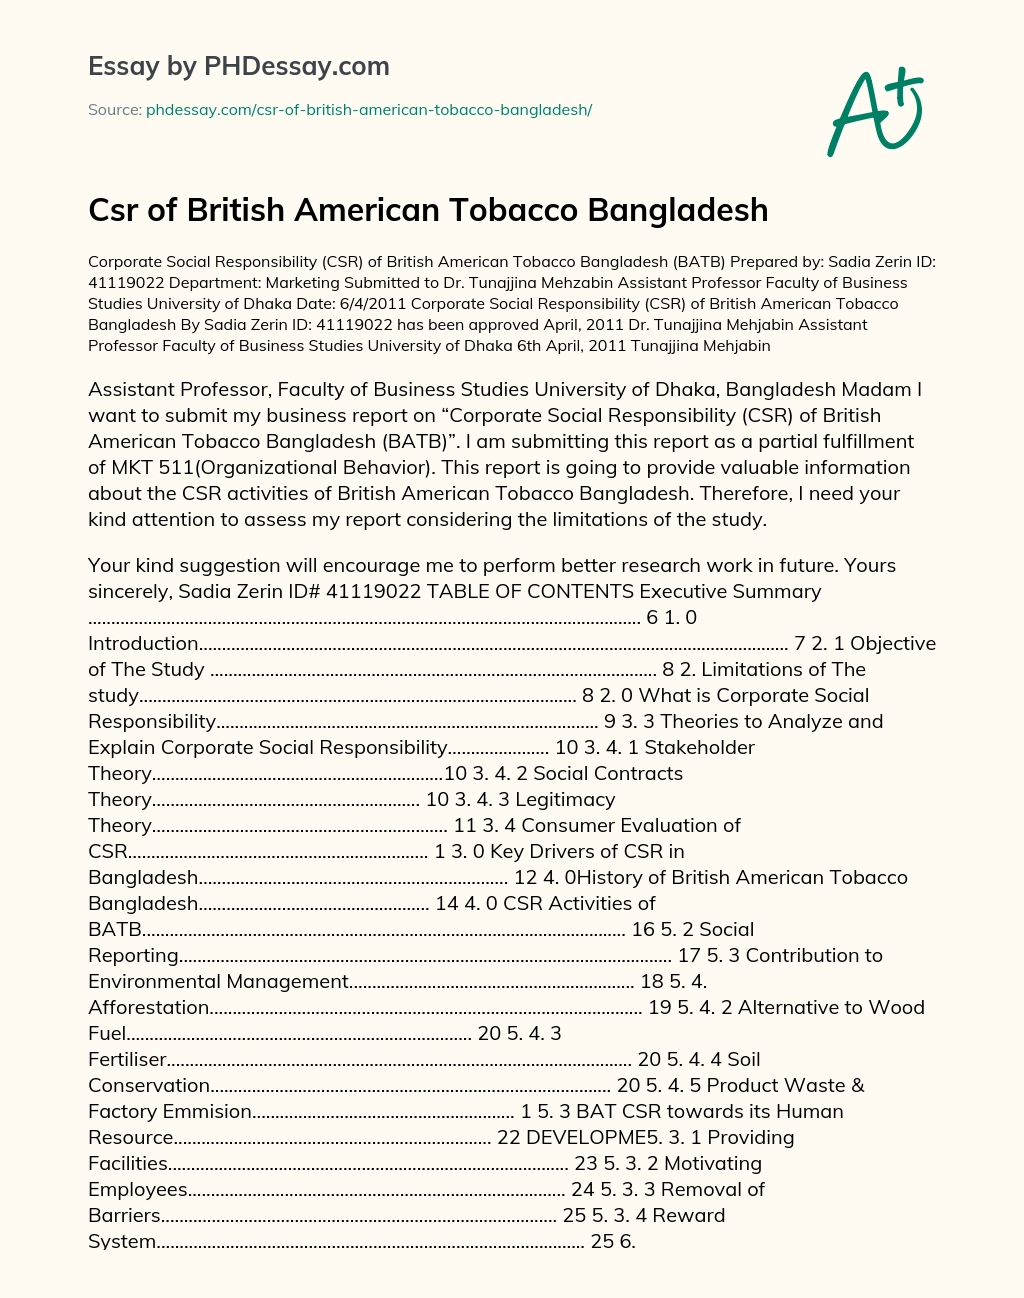 Csr of British American Tobacco Bangladesh essay